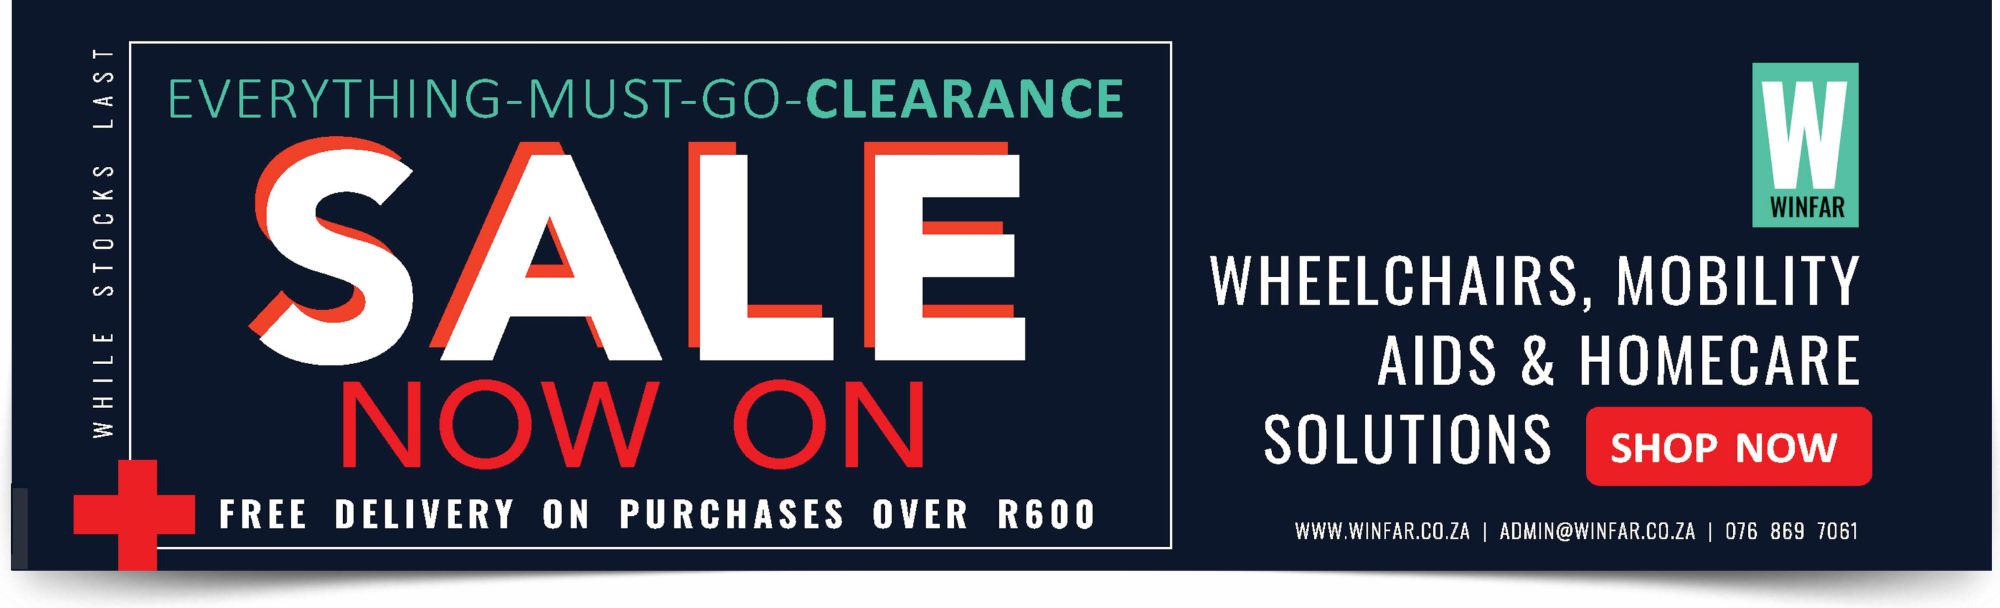 WINFAR Clearance Sale